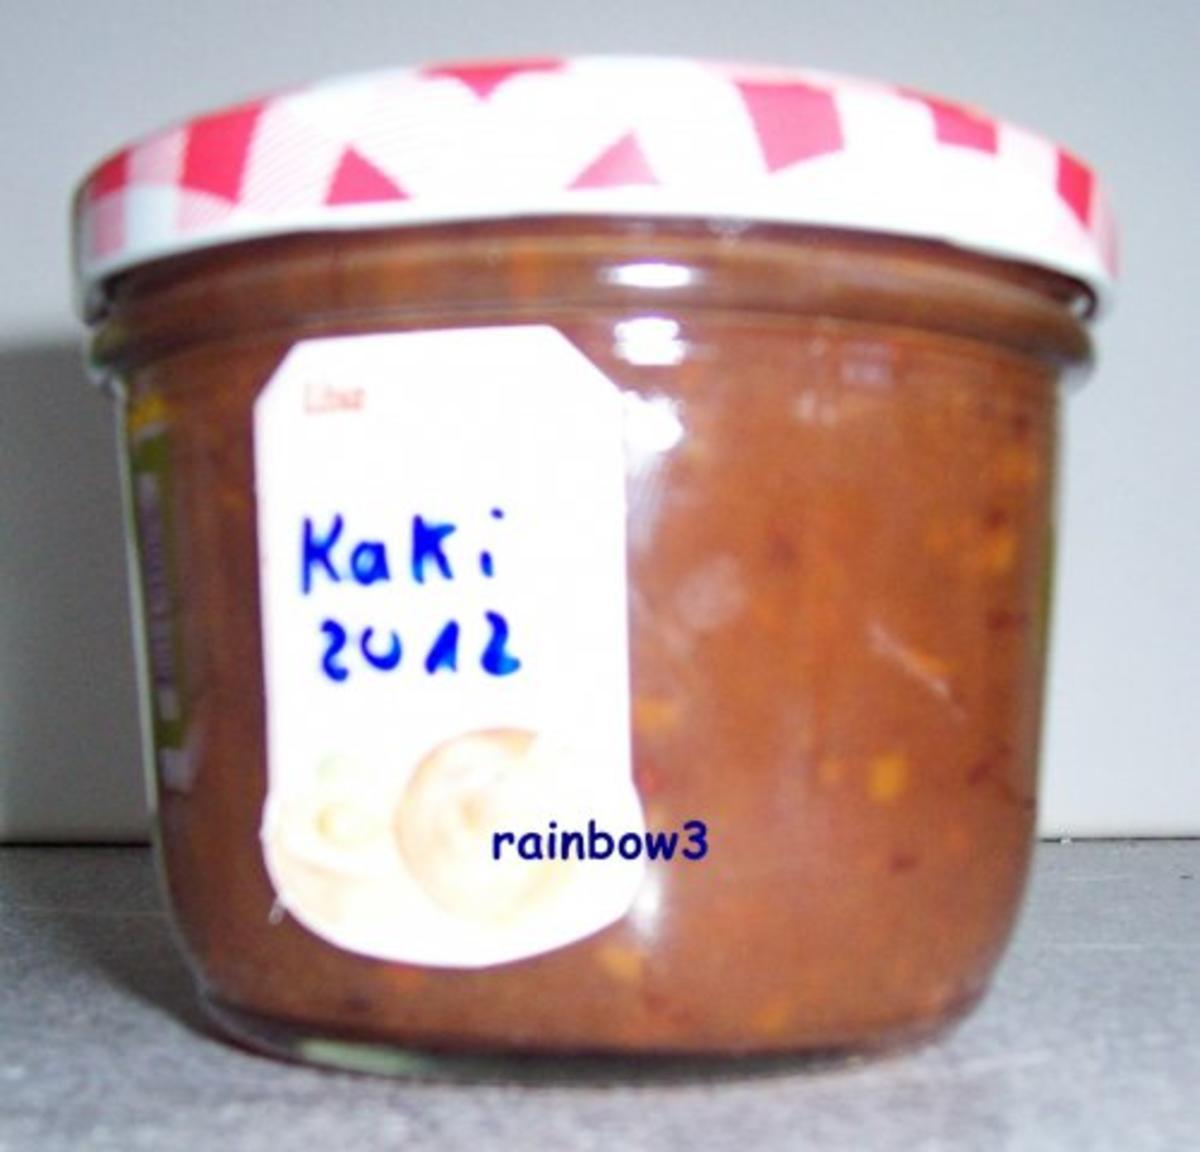 Einmachen: Kaki-Marmelade - Rezept